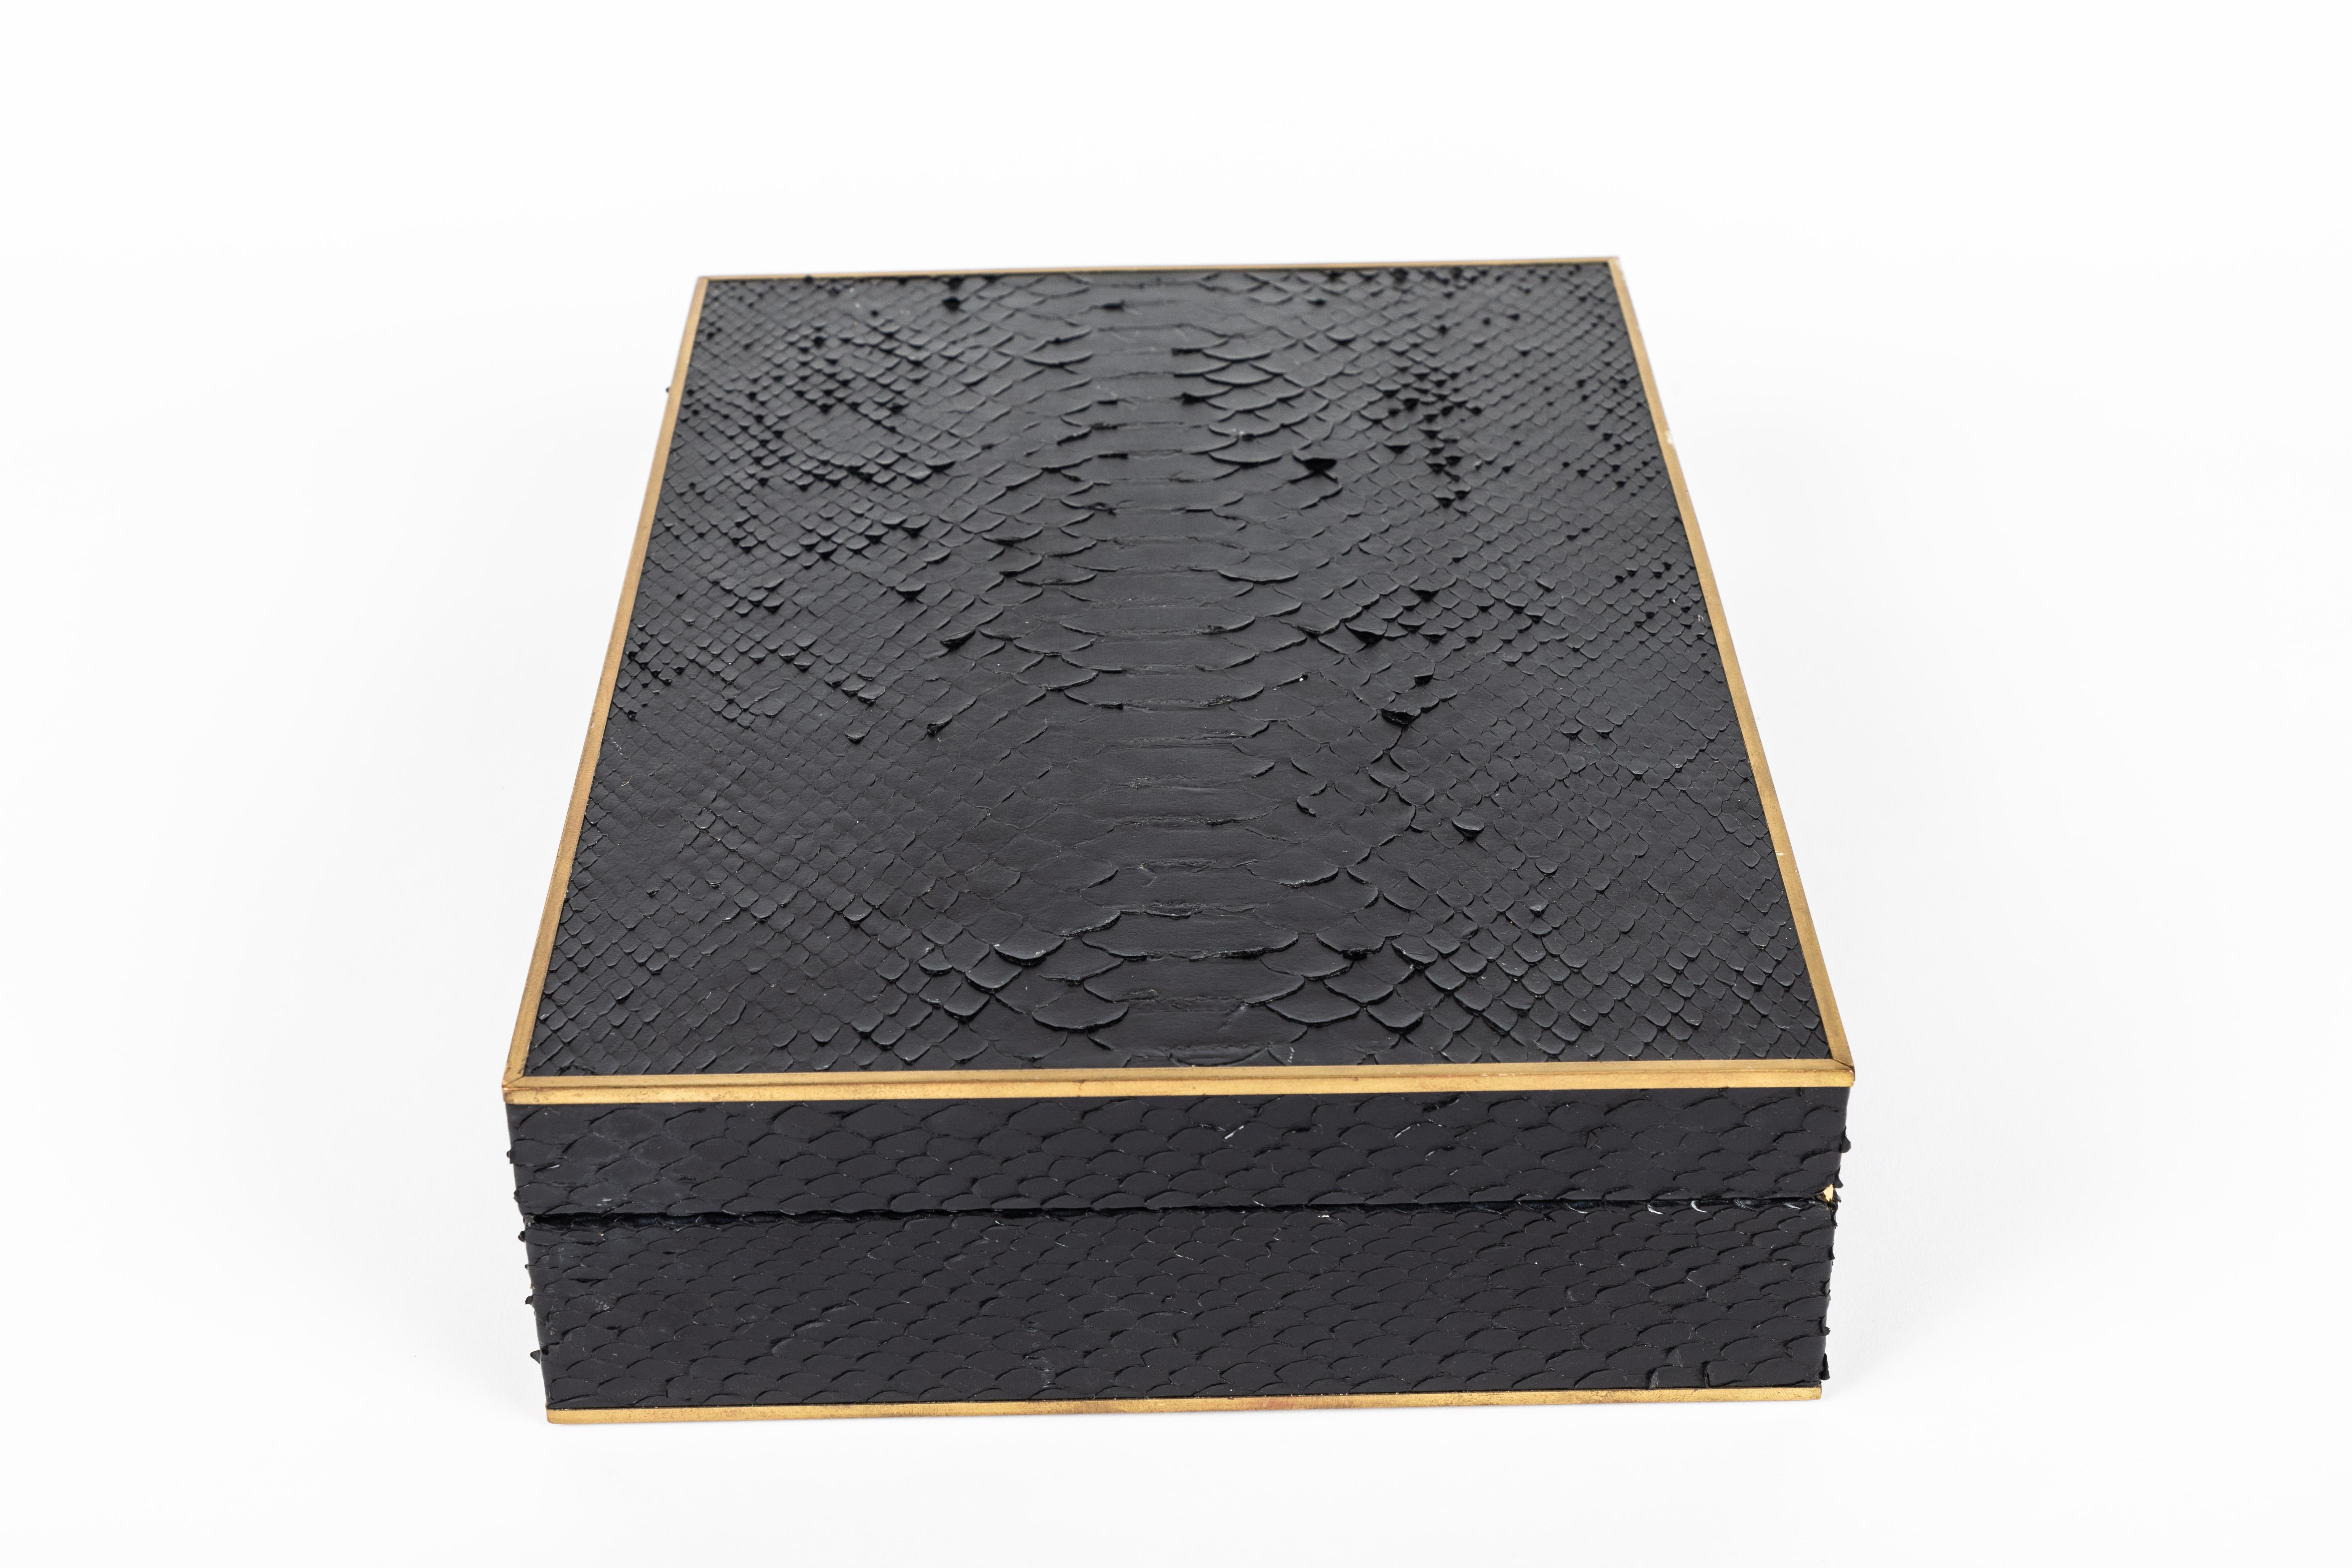 Custom decorative wood box with black python and brass edge details.